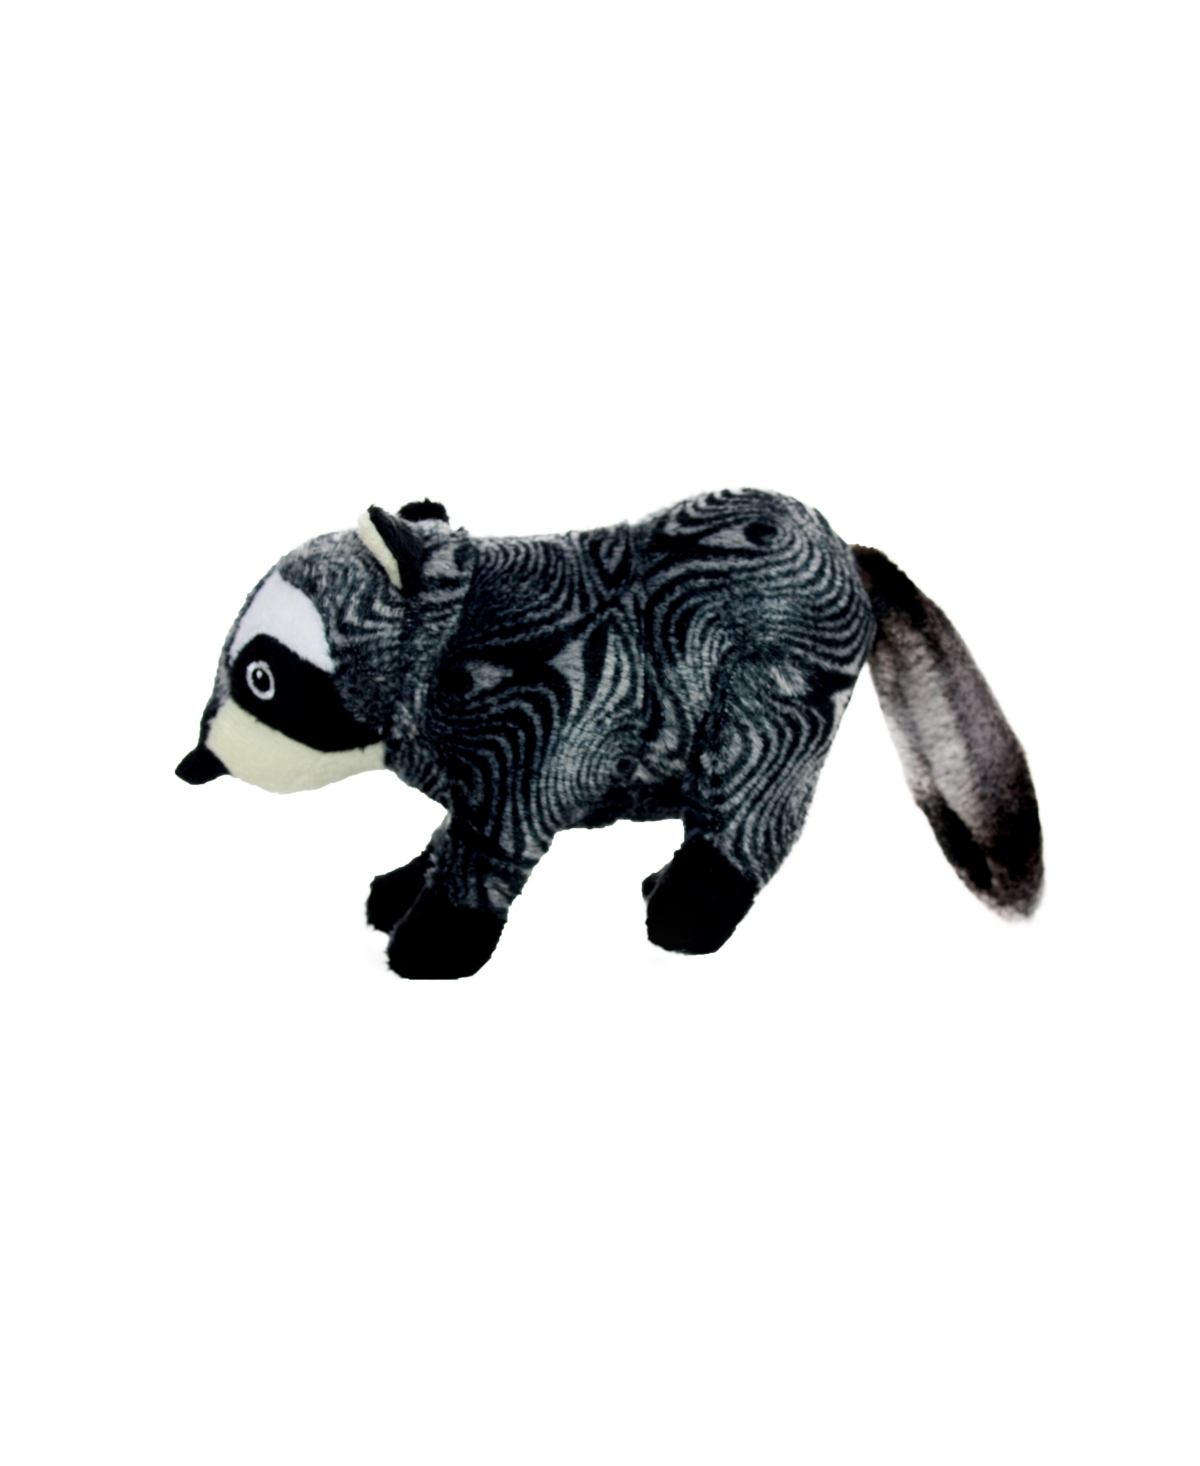 Jr Nature Raccoon, Dog Toy - Grey